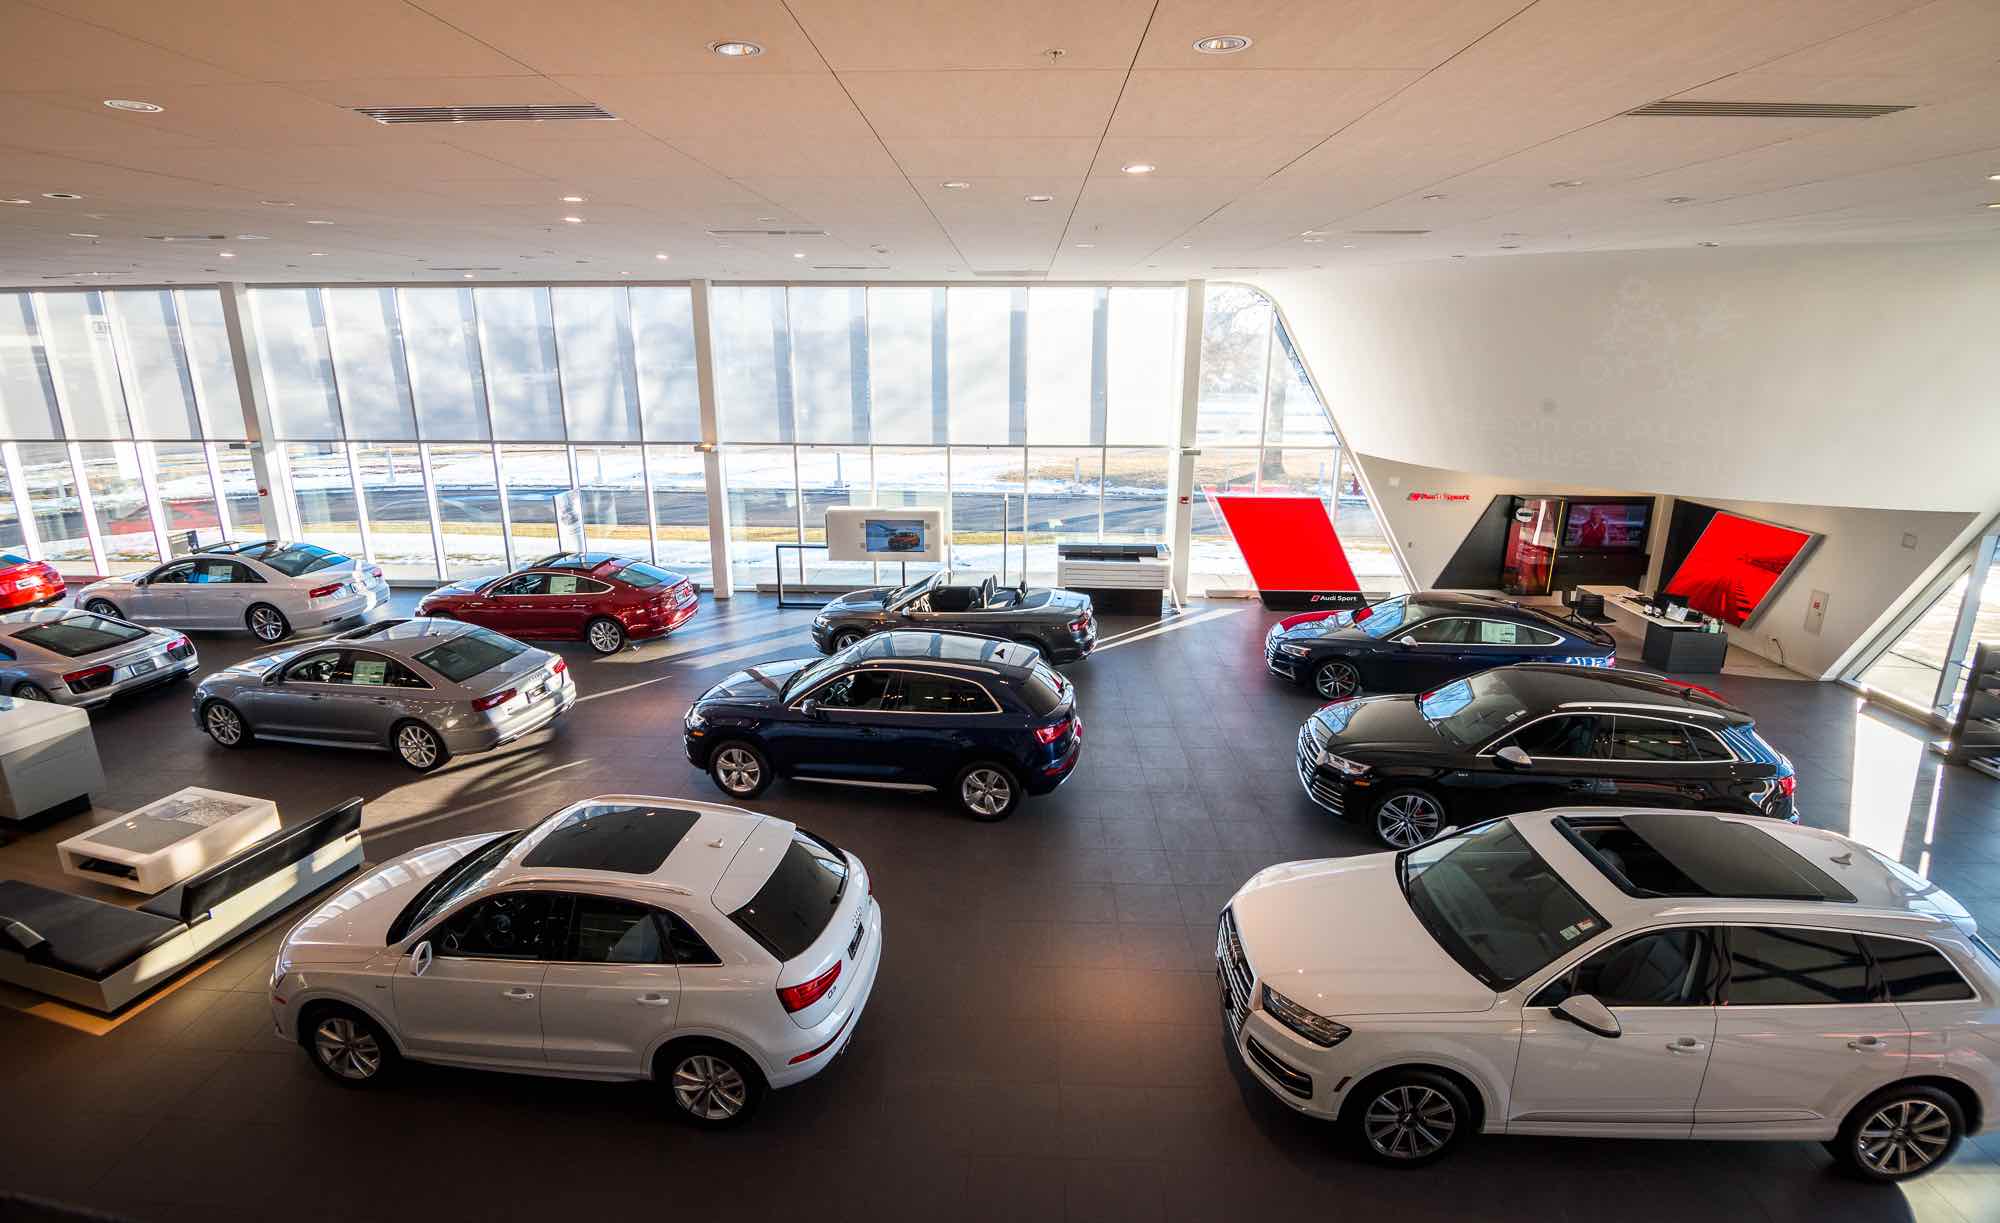 Audi Hoffman Estates Showroom and Interior